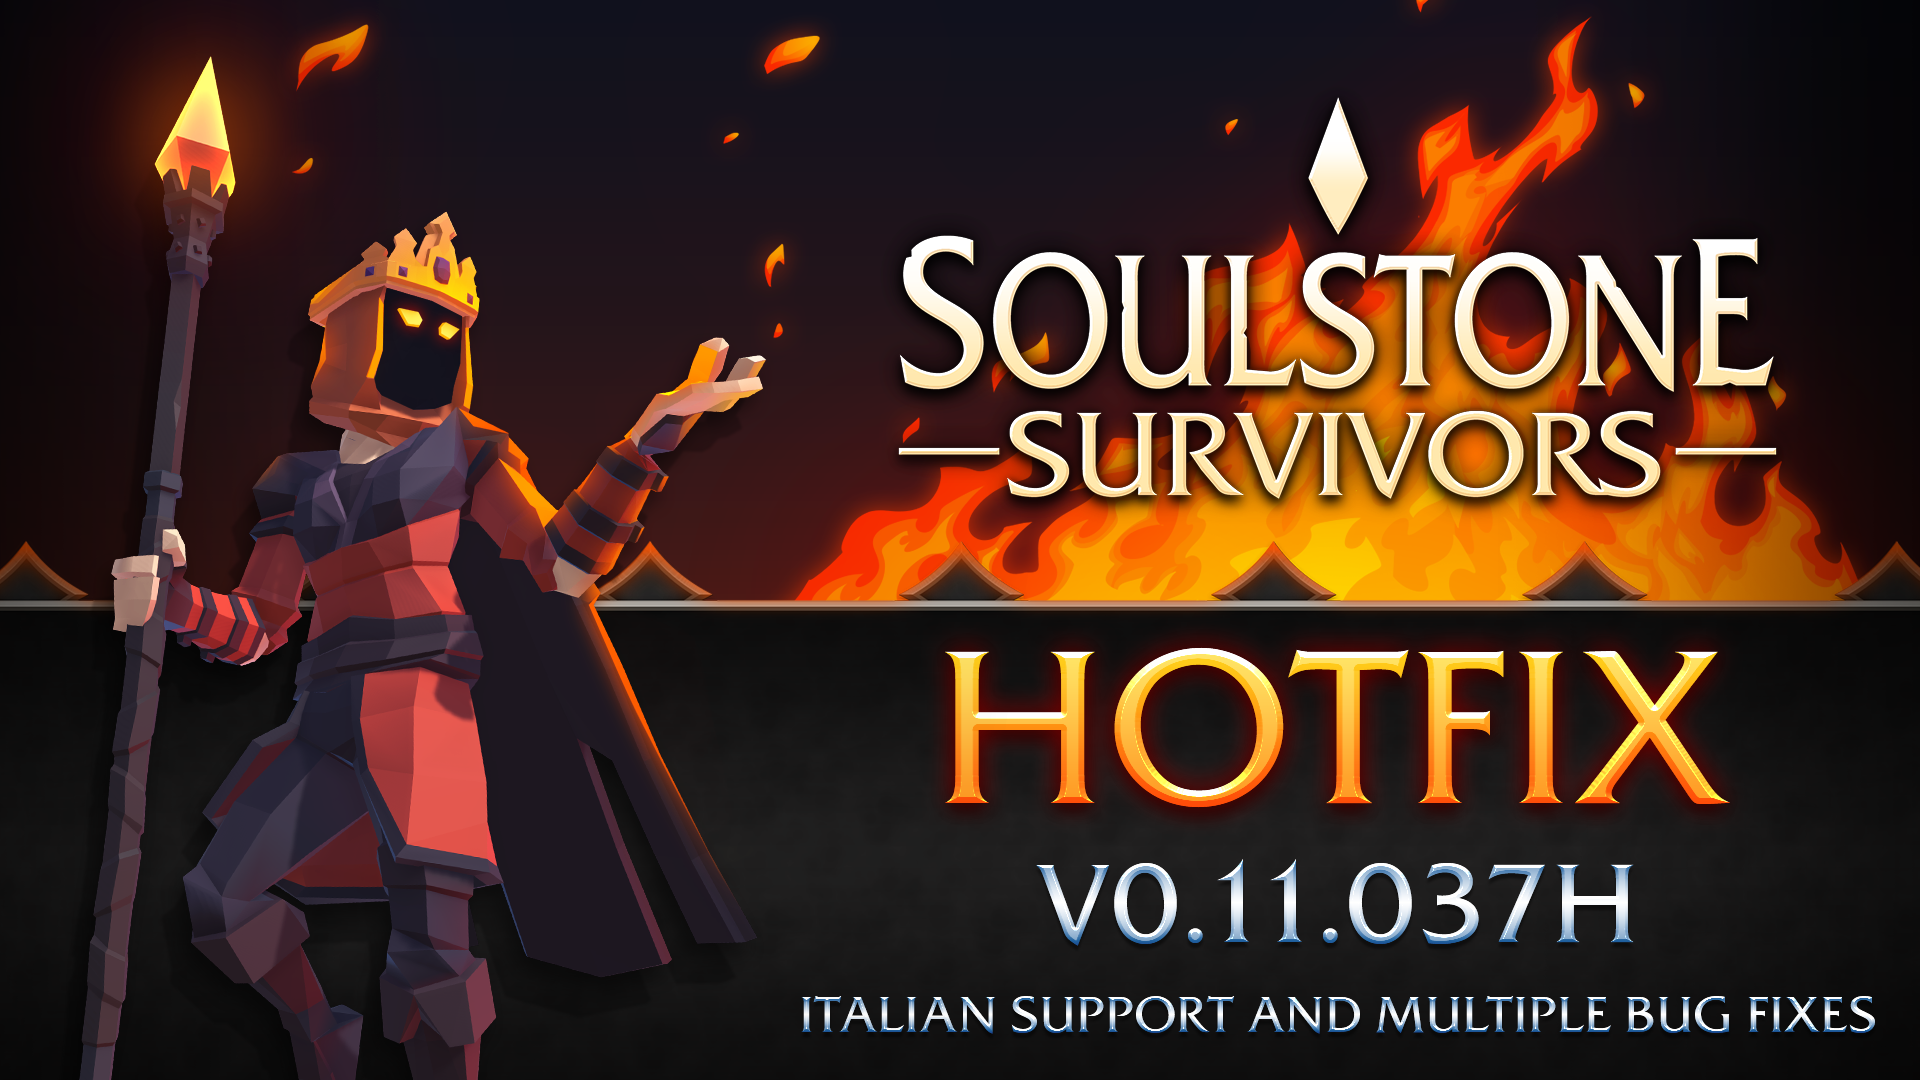 Soulstone Survivors (Game) - Giant Bomb